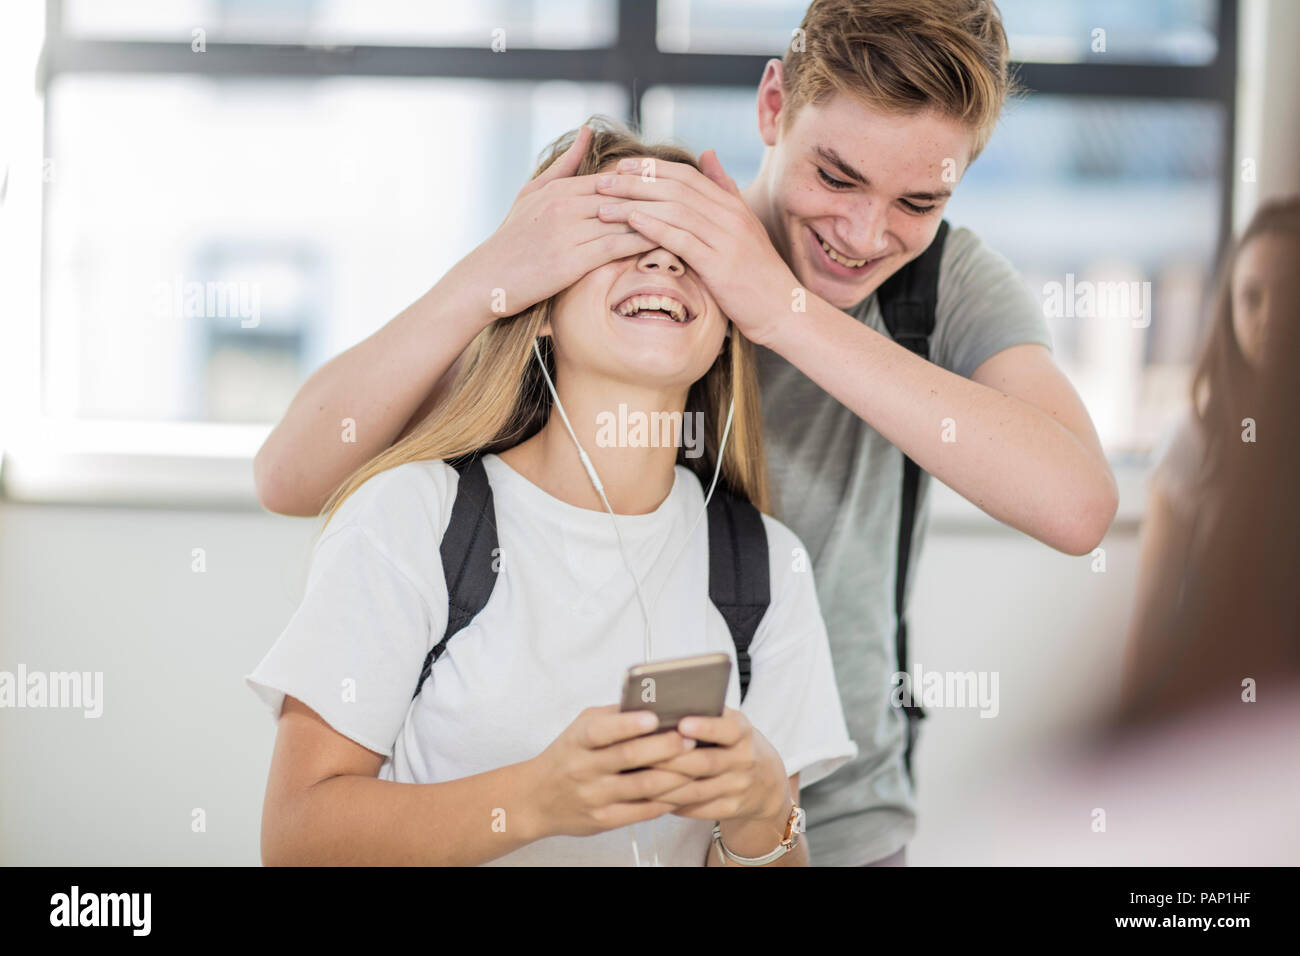 Boy covering girl's eyes in school Stock Photo